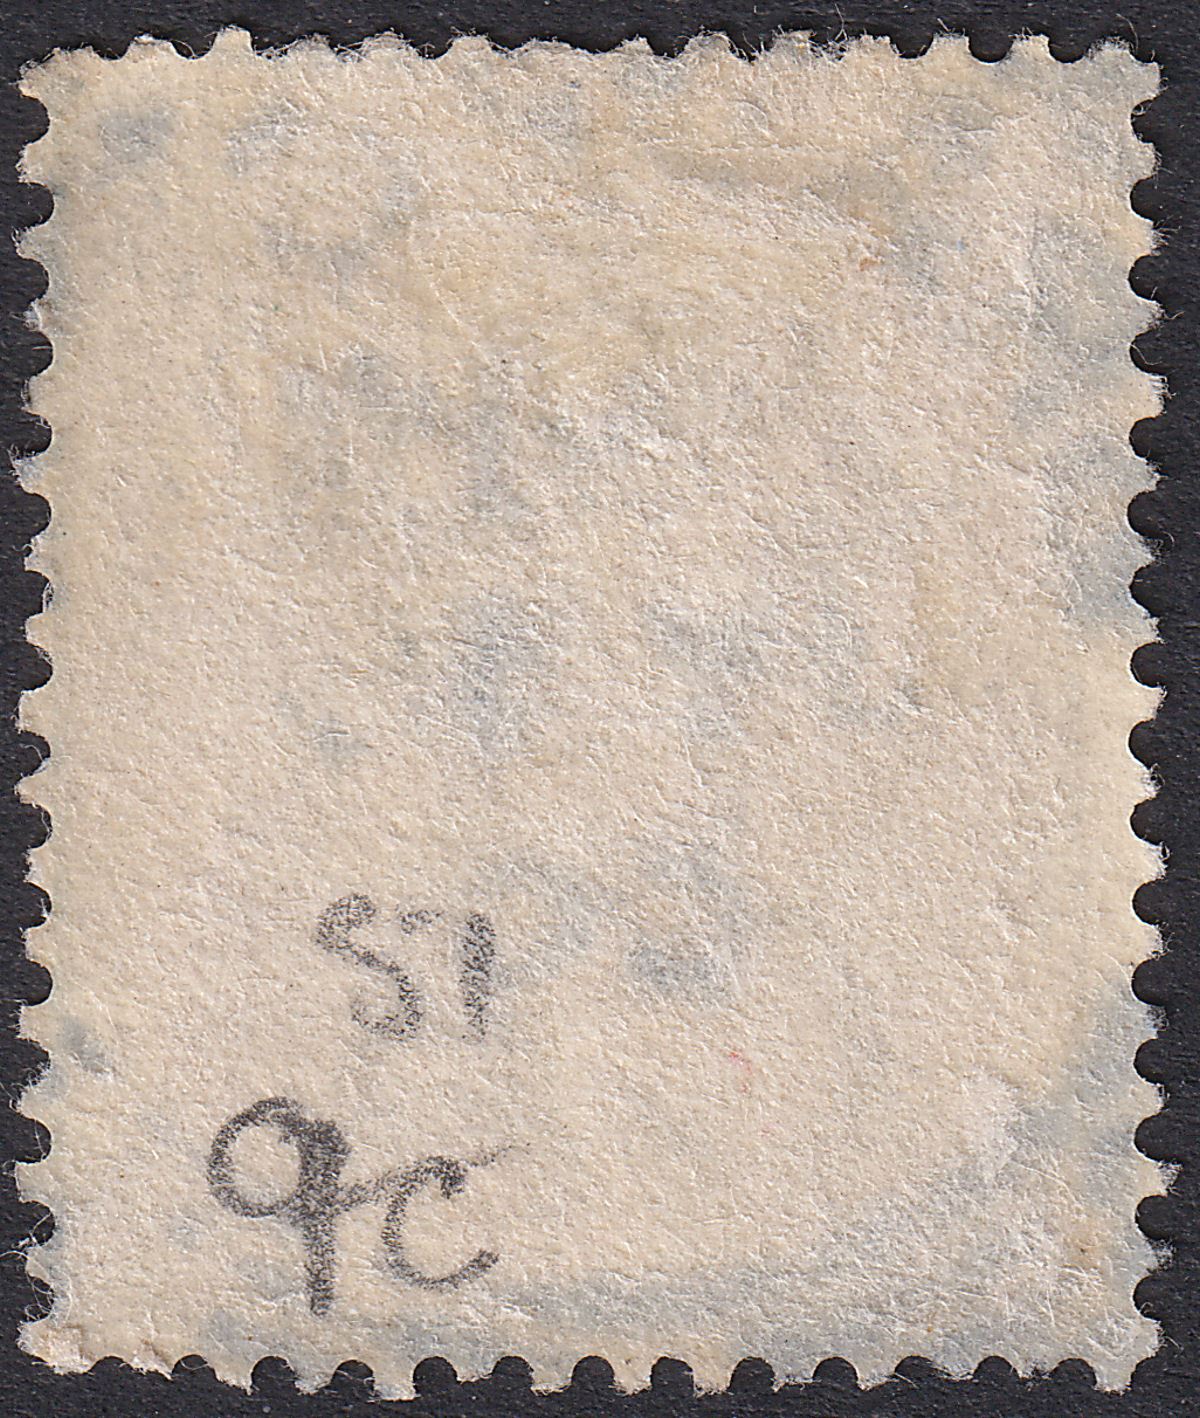 Hong Kong 1896 QV 4c Slate-Grey Used SG34 w BRADFORD UK Squared Circle Postmark